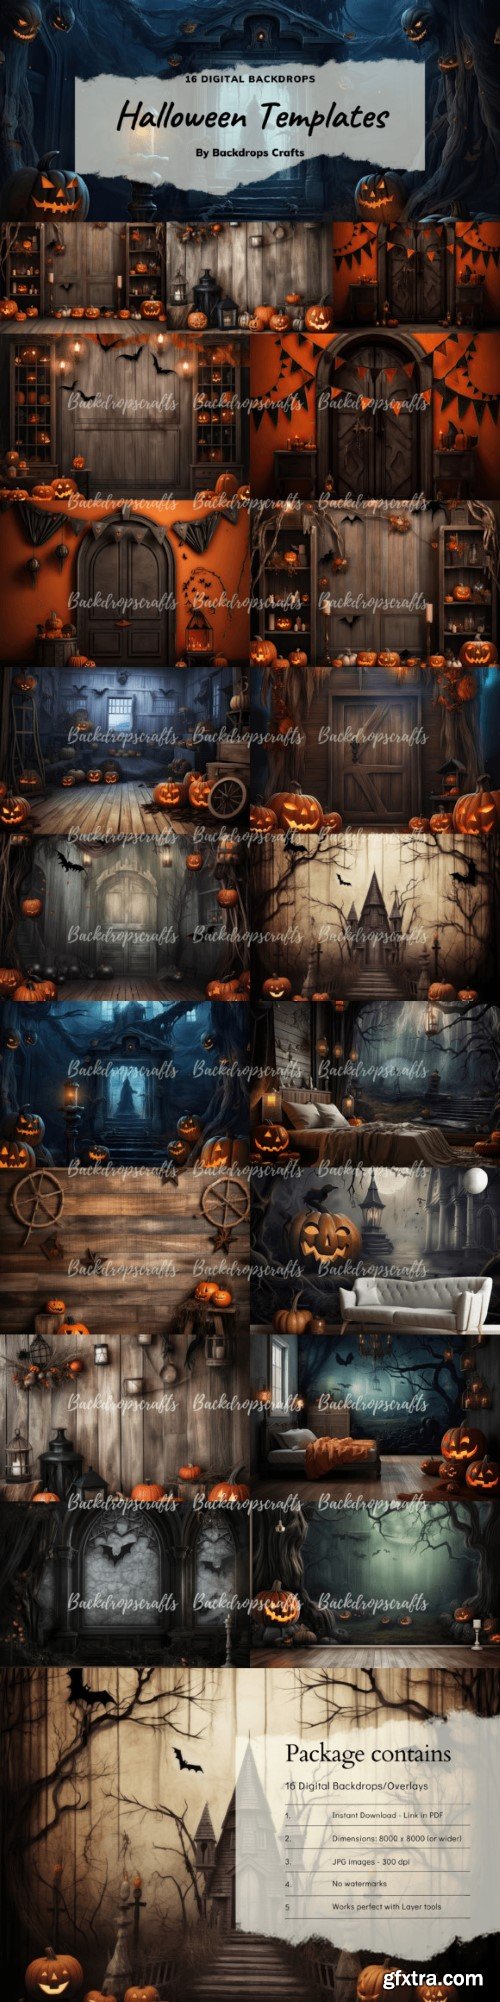 Halloween Themed | Digital Backdrops